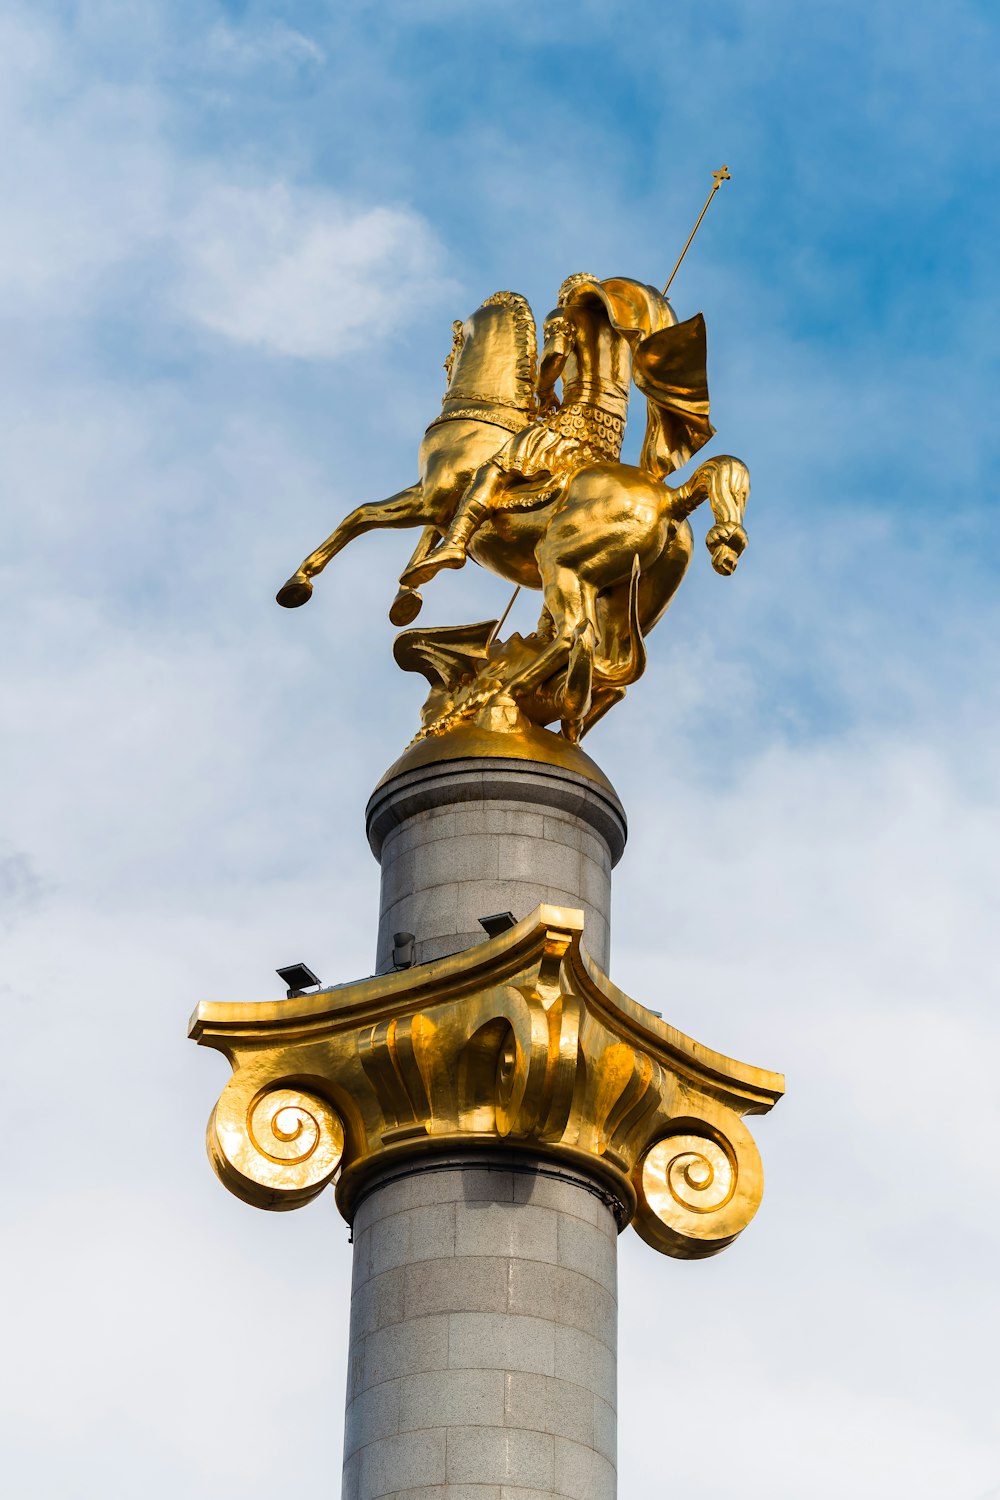 a statue of a man riding a horse on top of a pillar